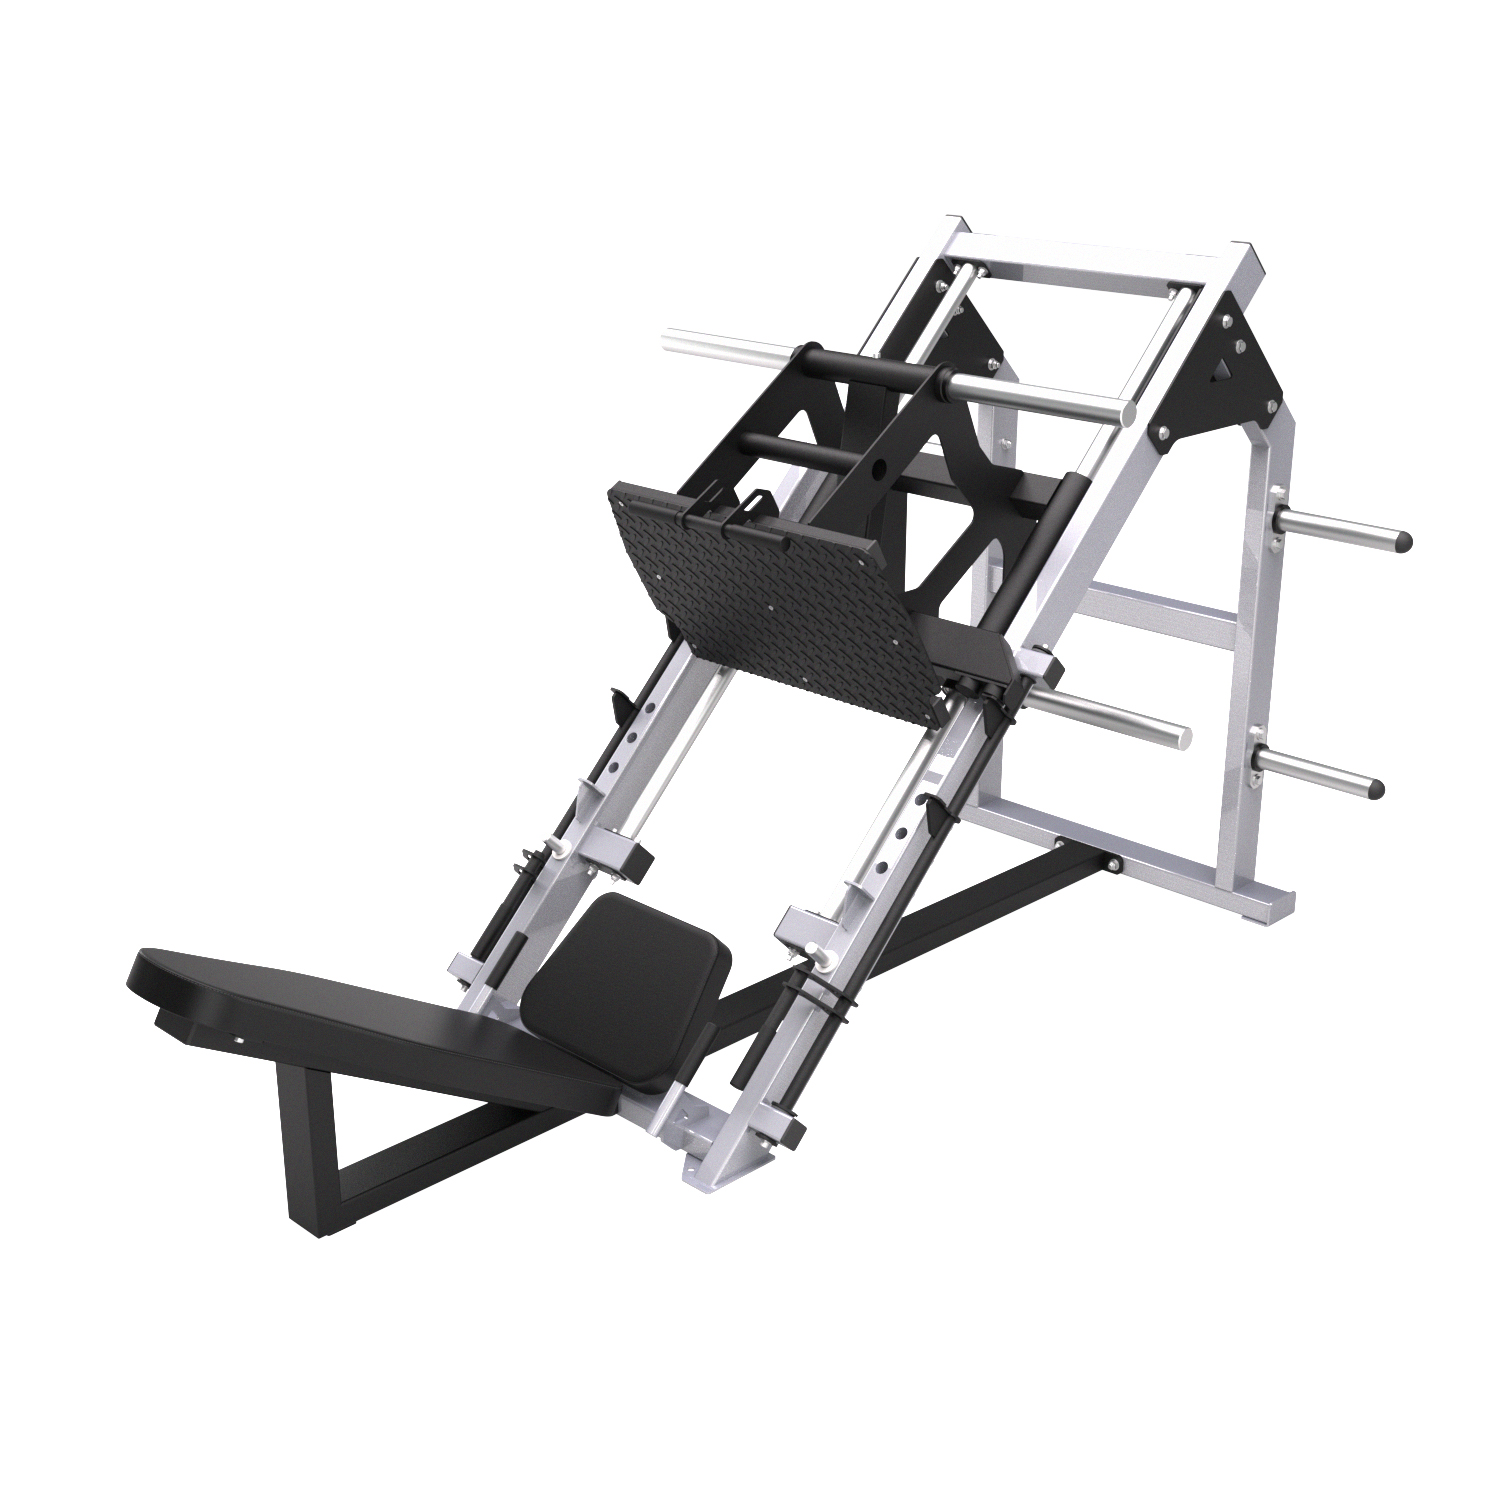 Plate Loaded Predator Leg Press - Core Gym Equipment